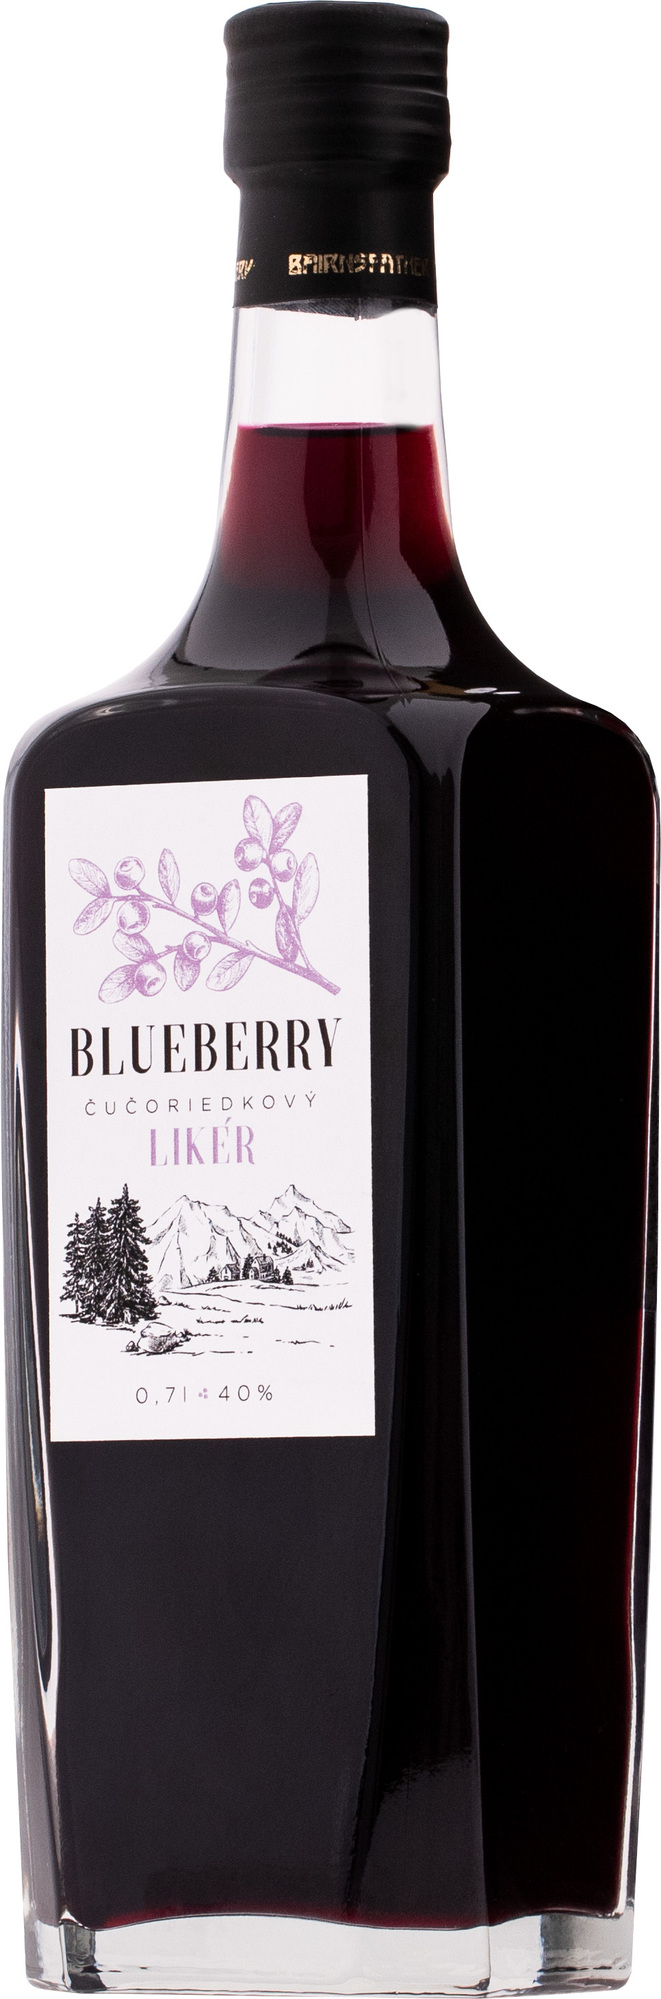 Bairnsfather Blueberry likér 40% 0,7l